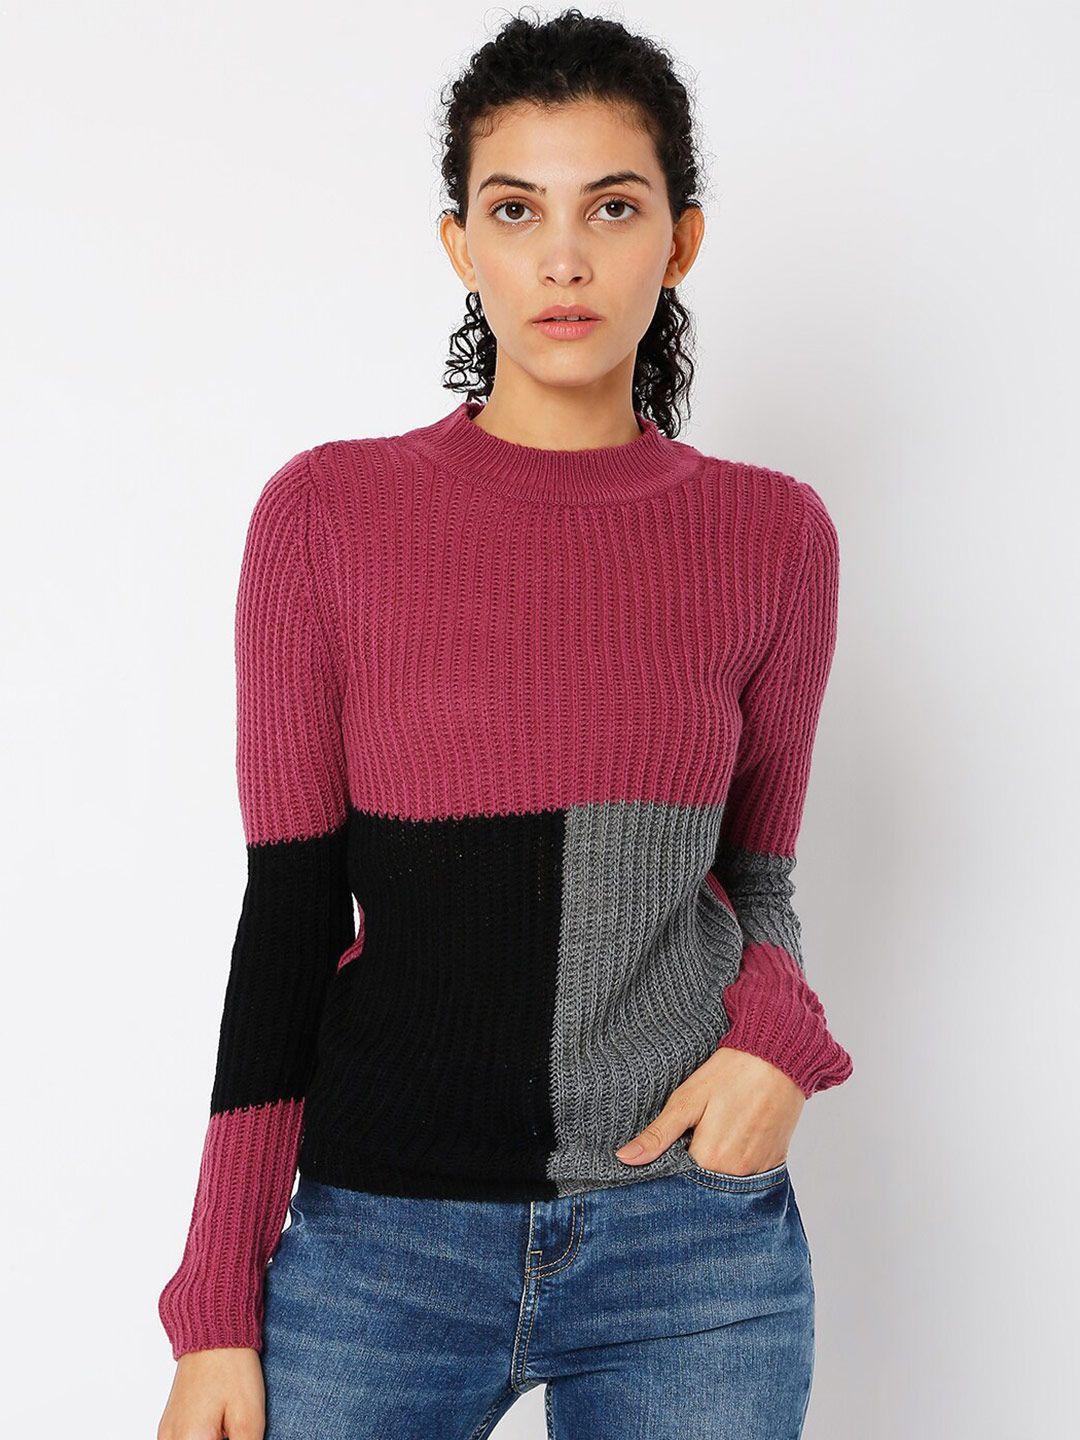 vero-moda-marquee-collection-women-pink-&-black-colourblocked-pullover-cotton-sweater